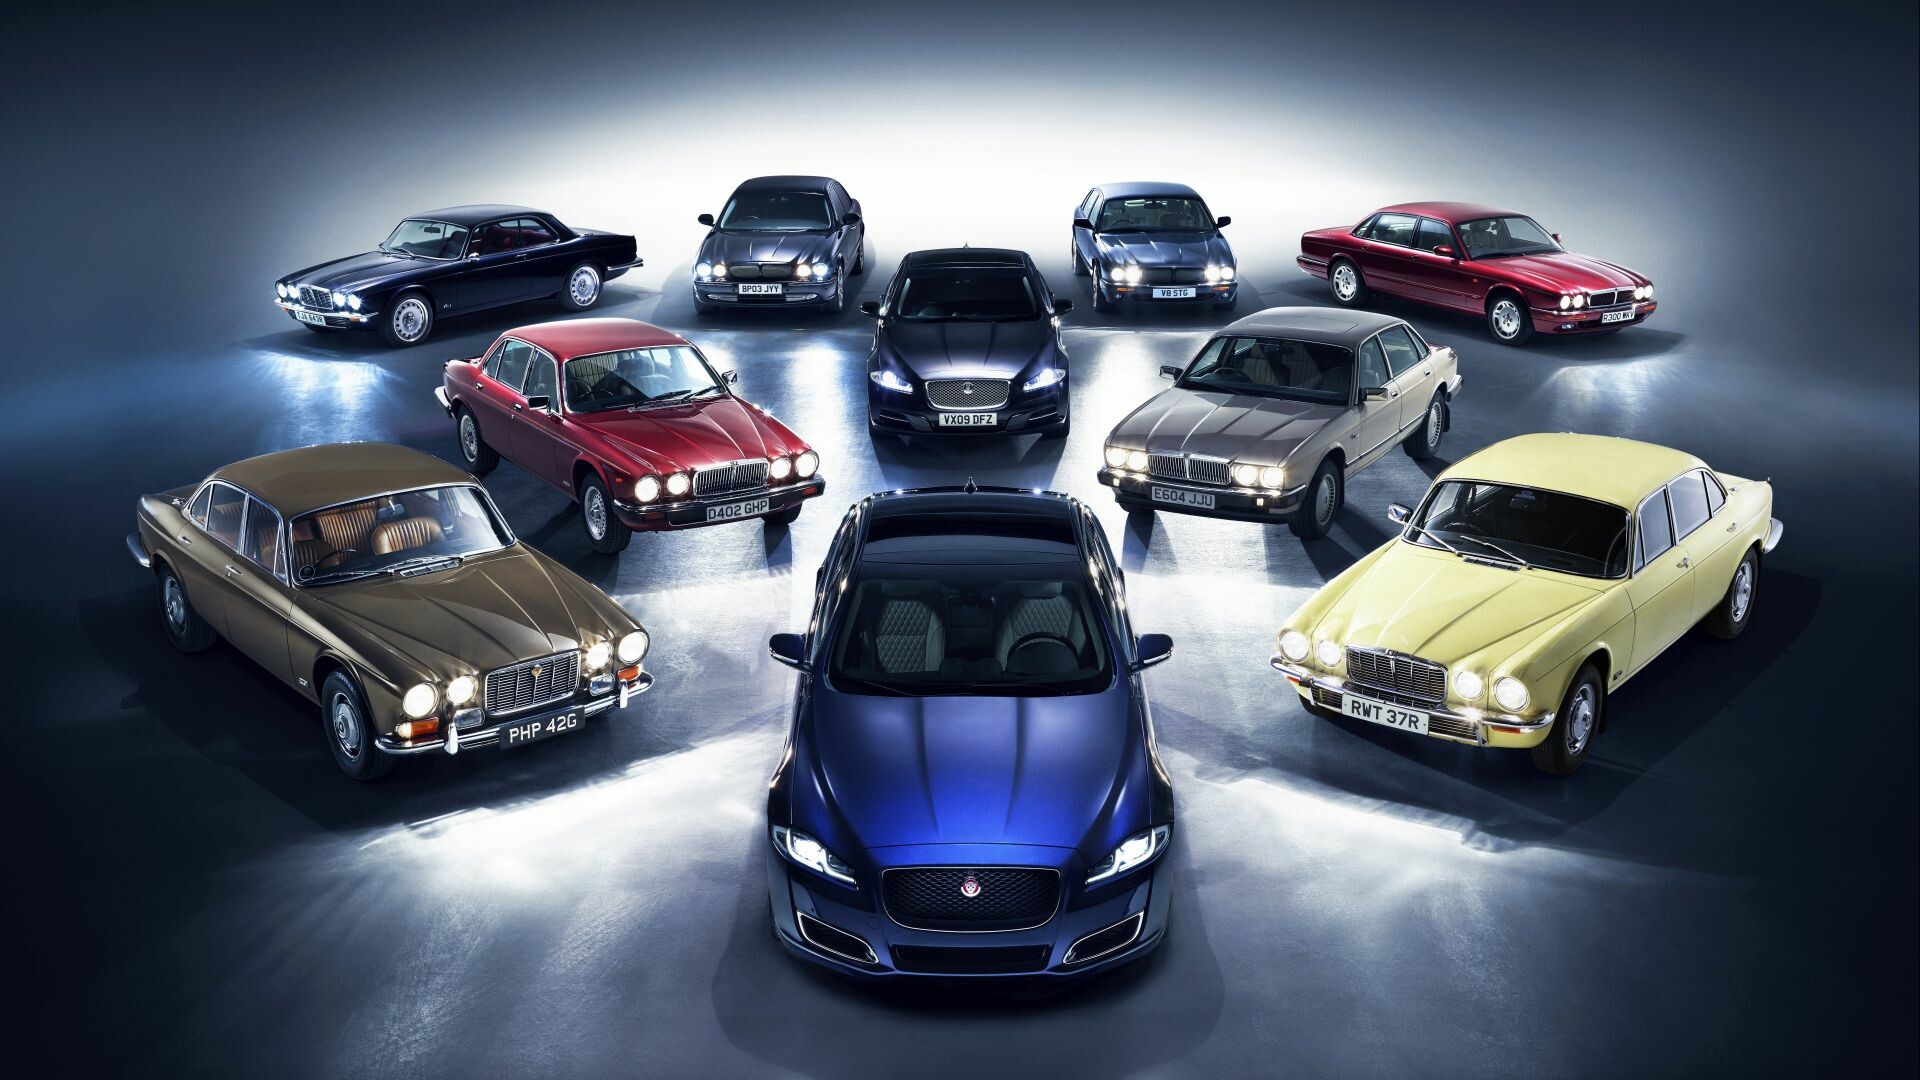 Jaguar Cars: The luxury vehicle brand of JLR, Cars. 1920x1080 Full HD Wallpaper.